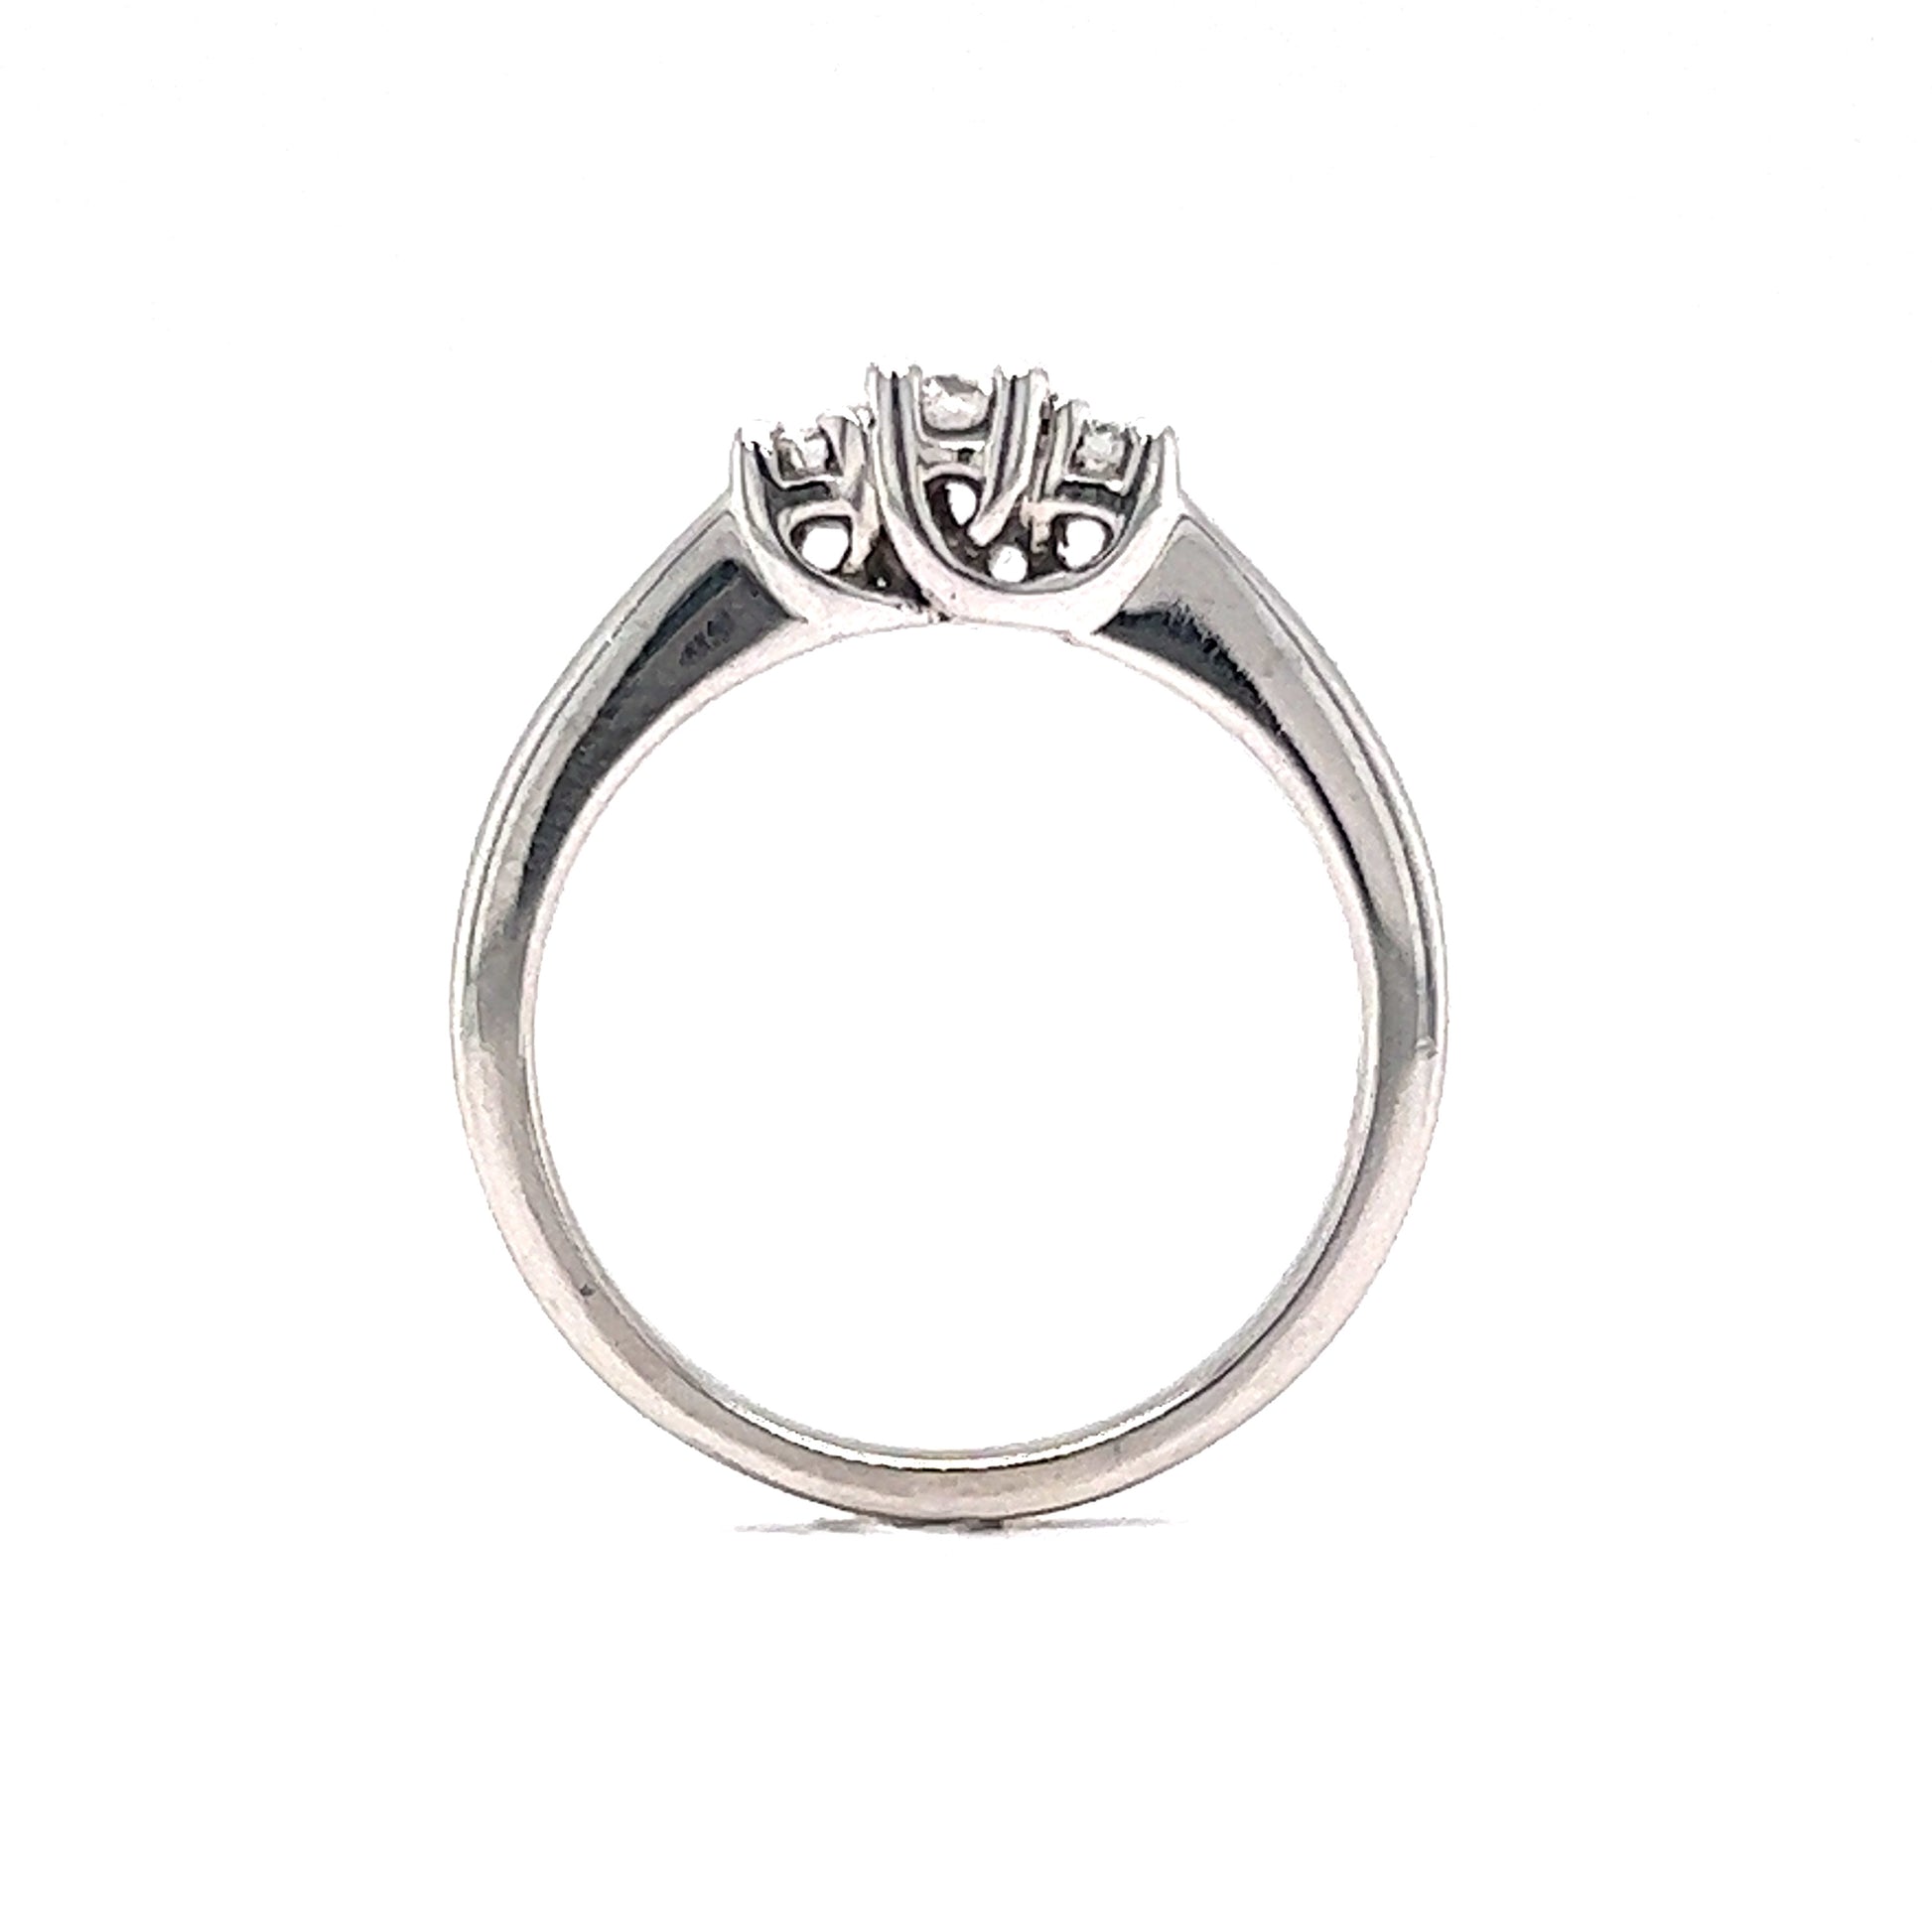 Vintage Mid-Century Three Stone Diamond Engagement Ring in 14k